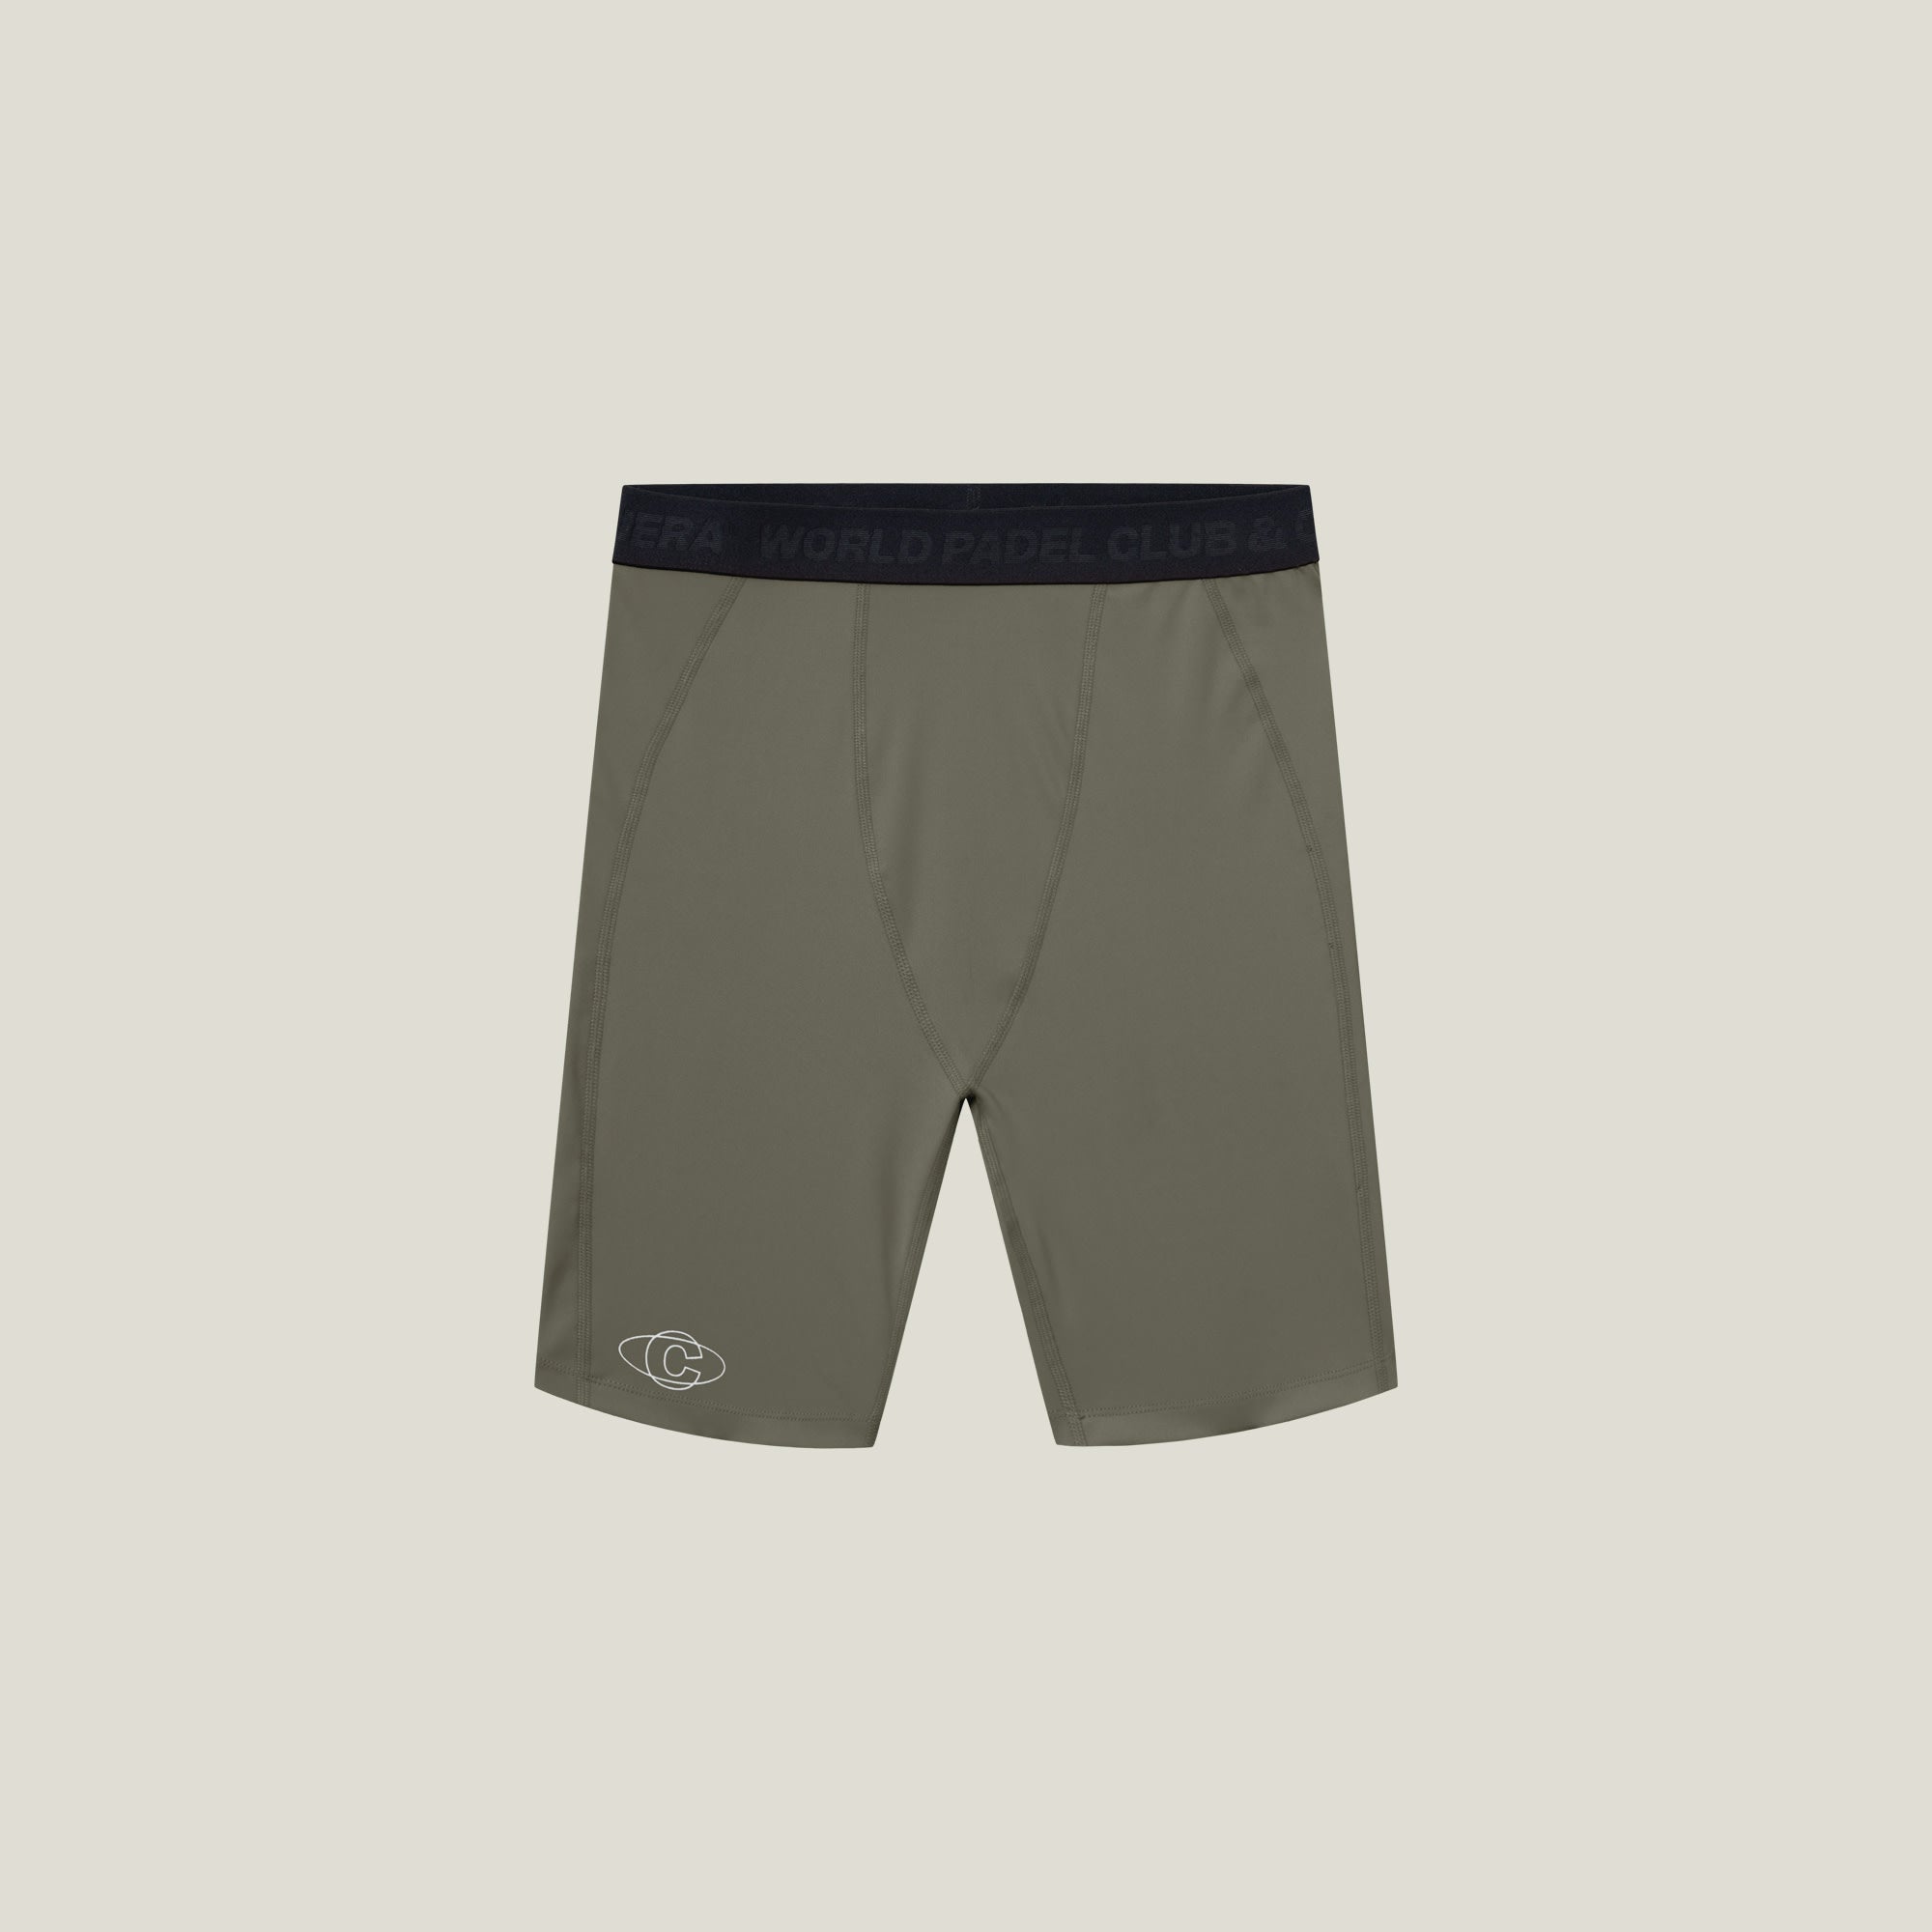 Oncourt Shorts Kit - Black, Army & Grey